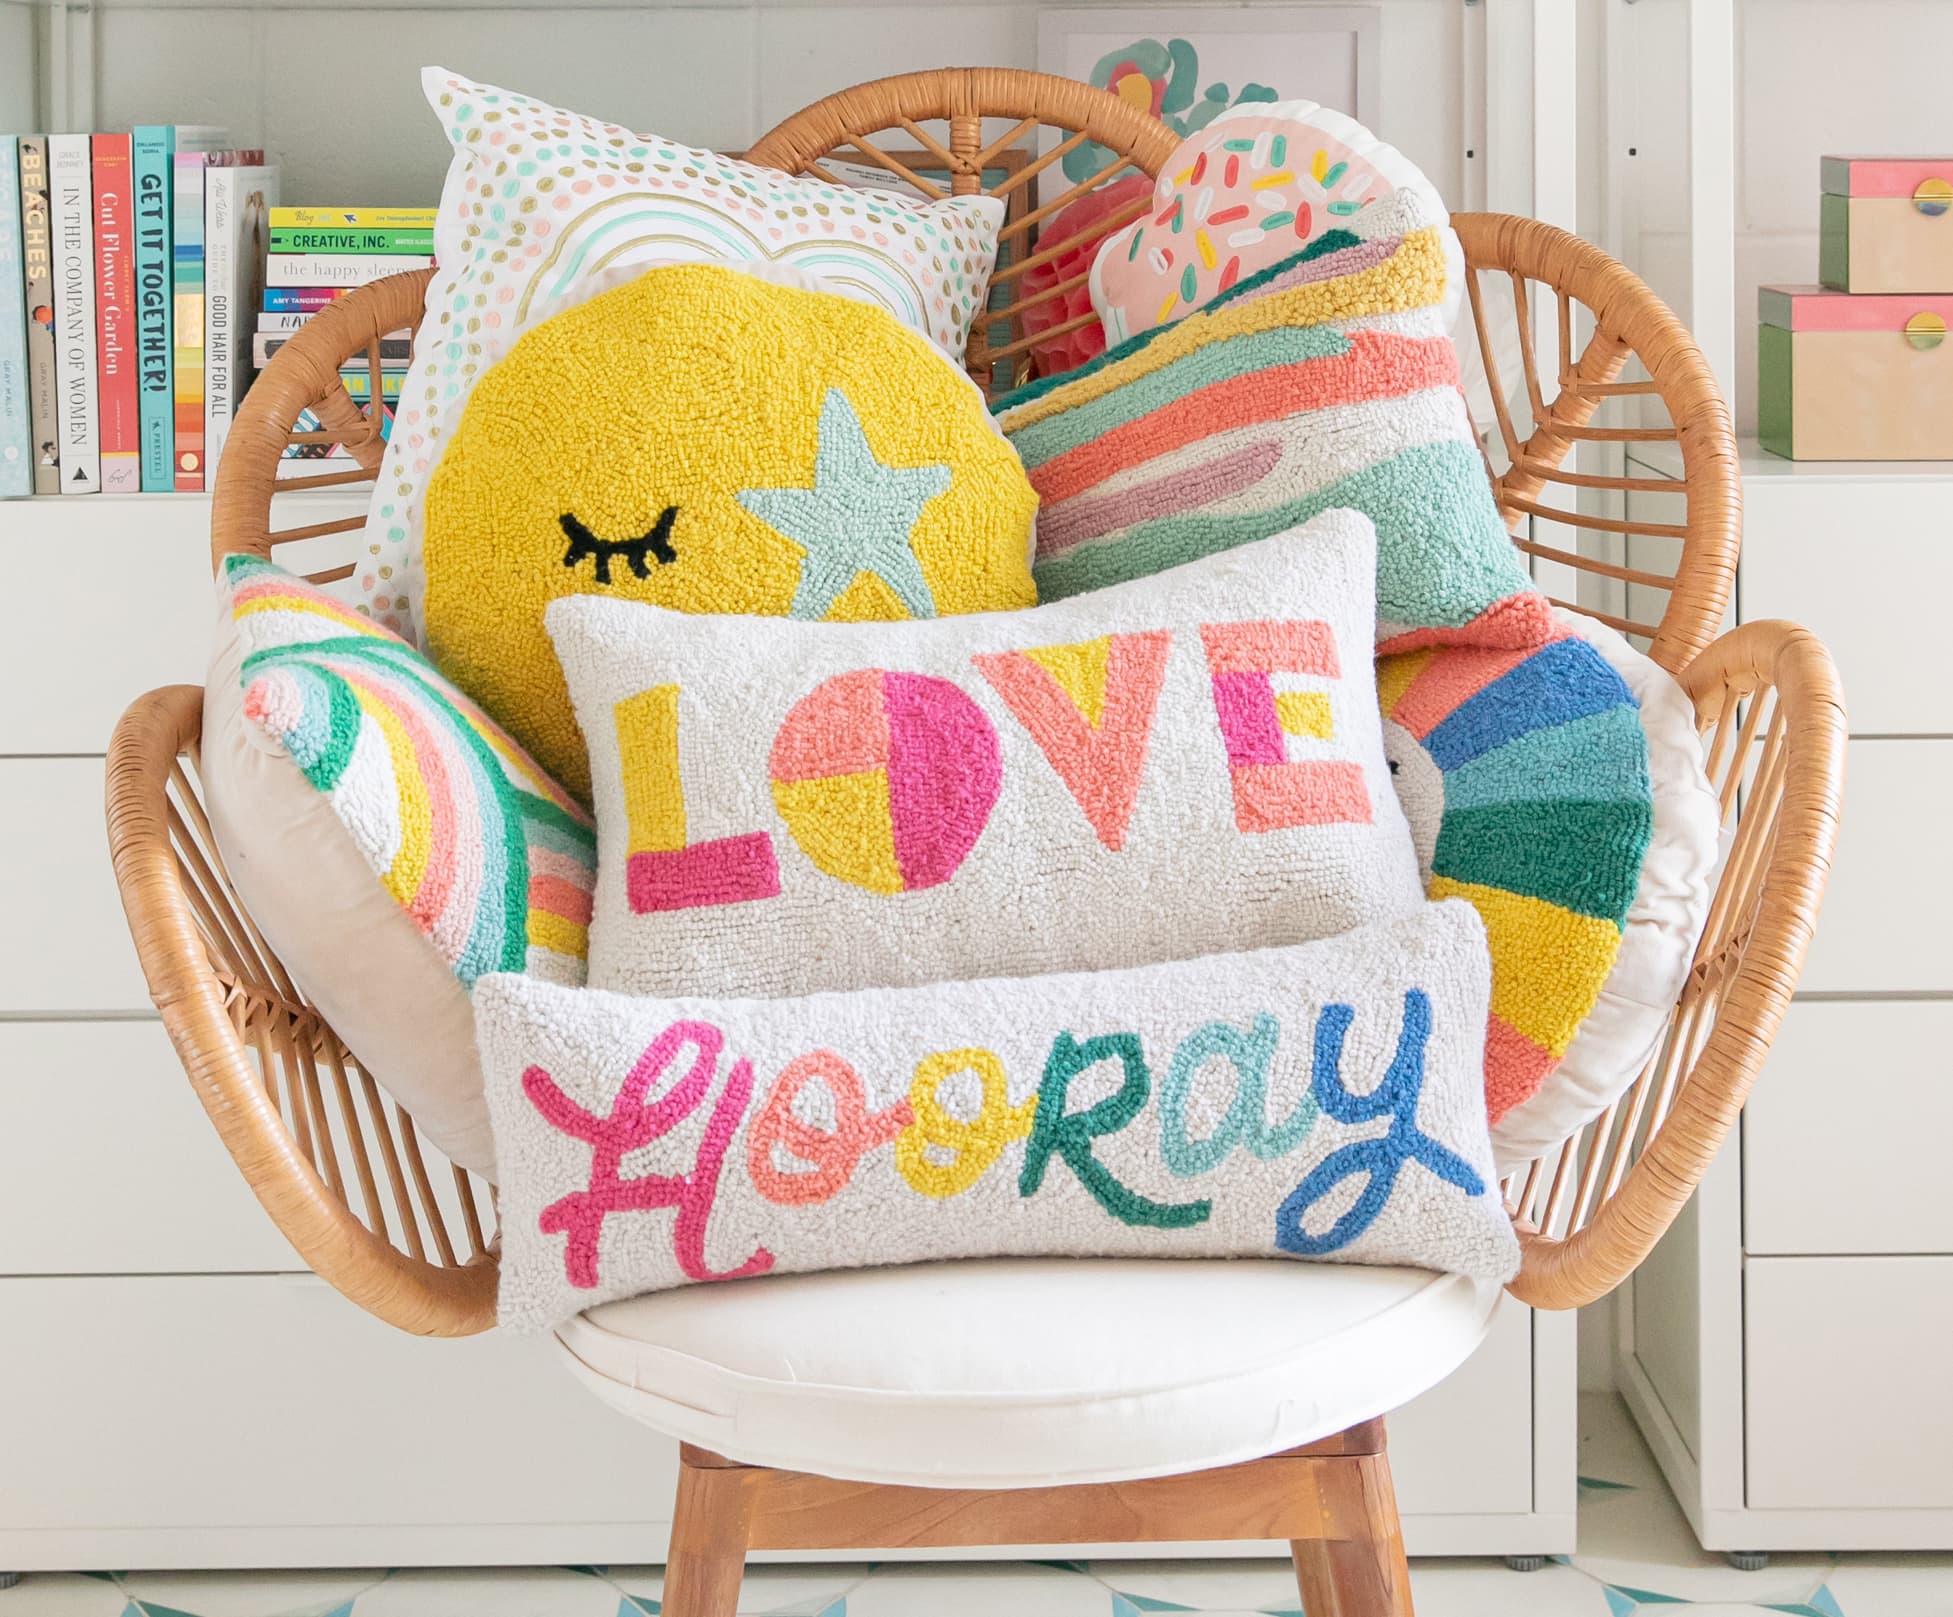 https://cdn.apartmenttherapy.info/image/upload/v1563727478/at/news-culture/2019-07/oh-joy-peking-handicraft-pillows.jpg